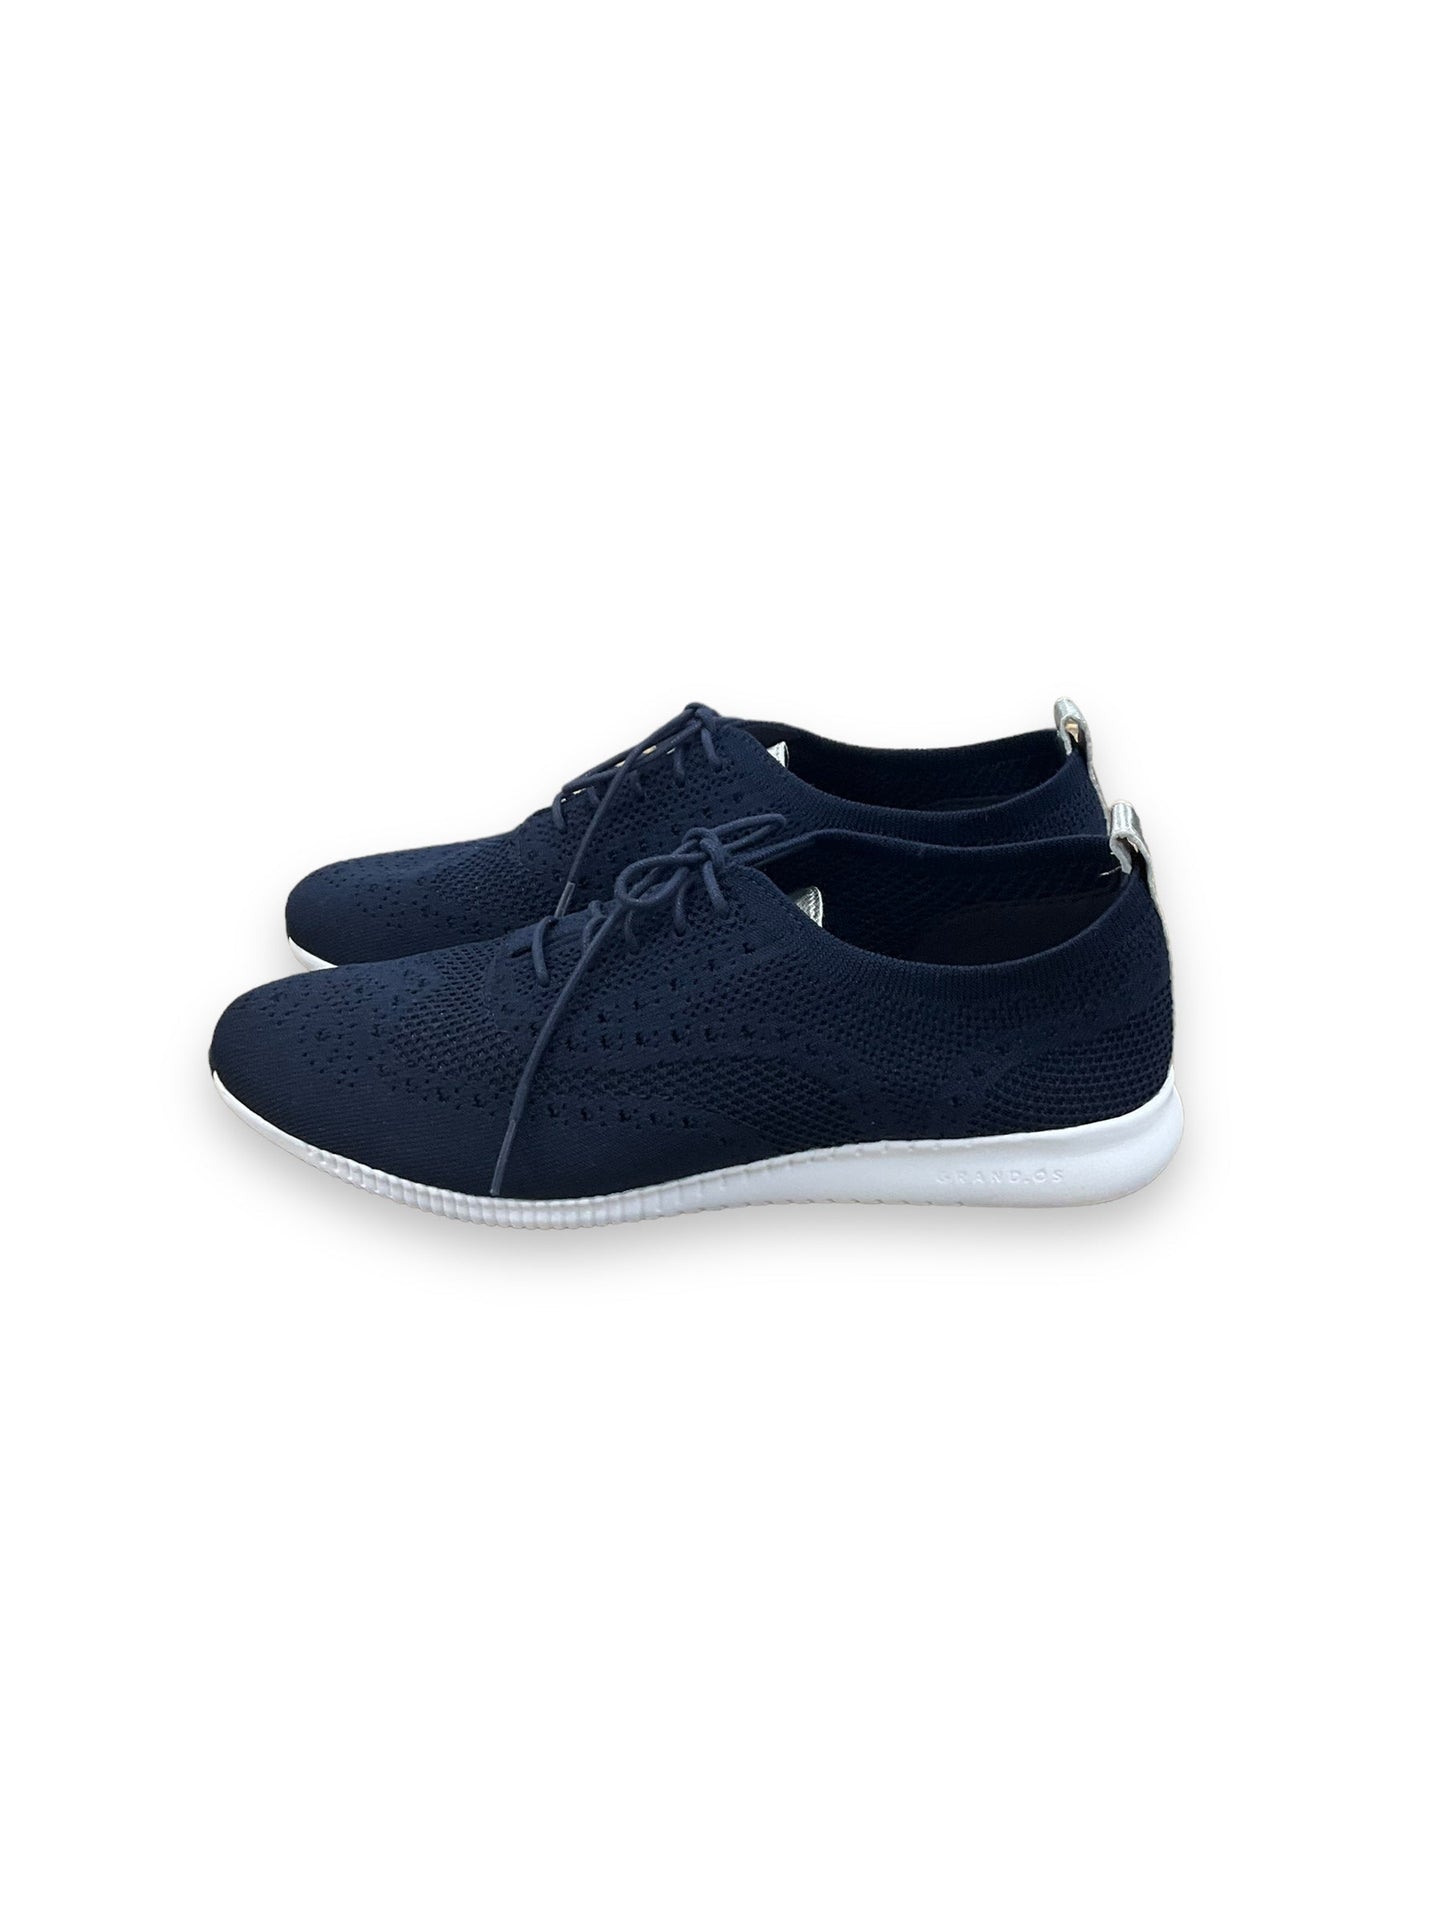 Blue Shoes Athletic Cole-haan, Size 10